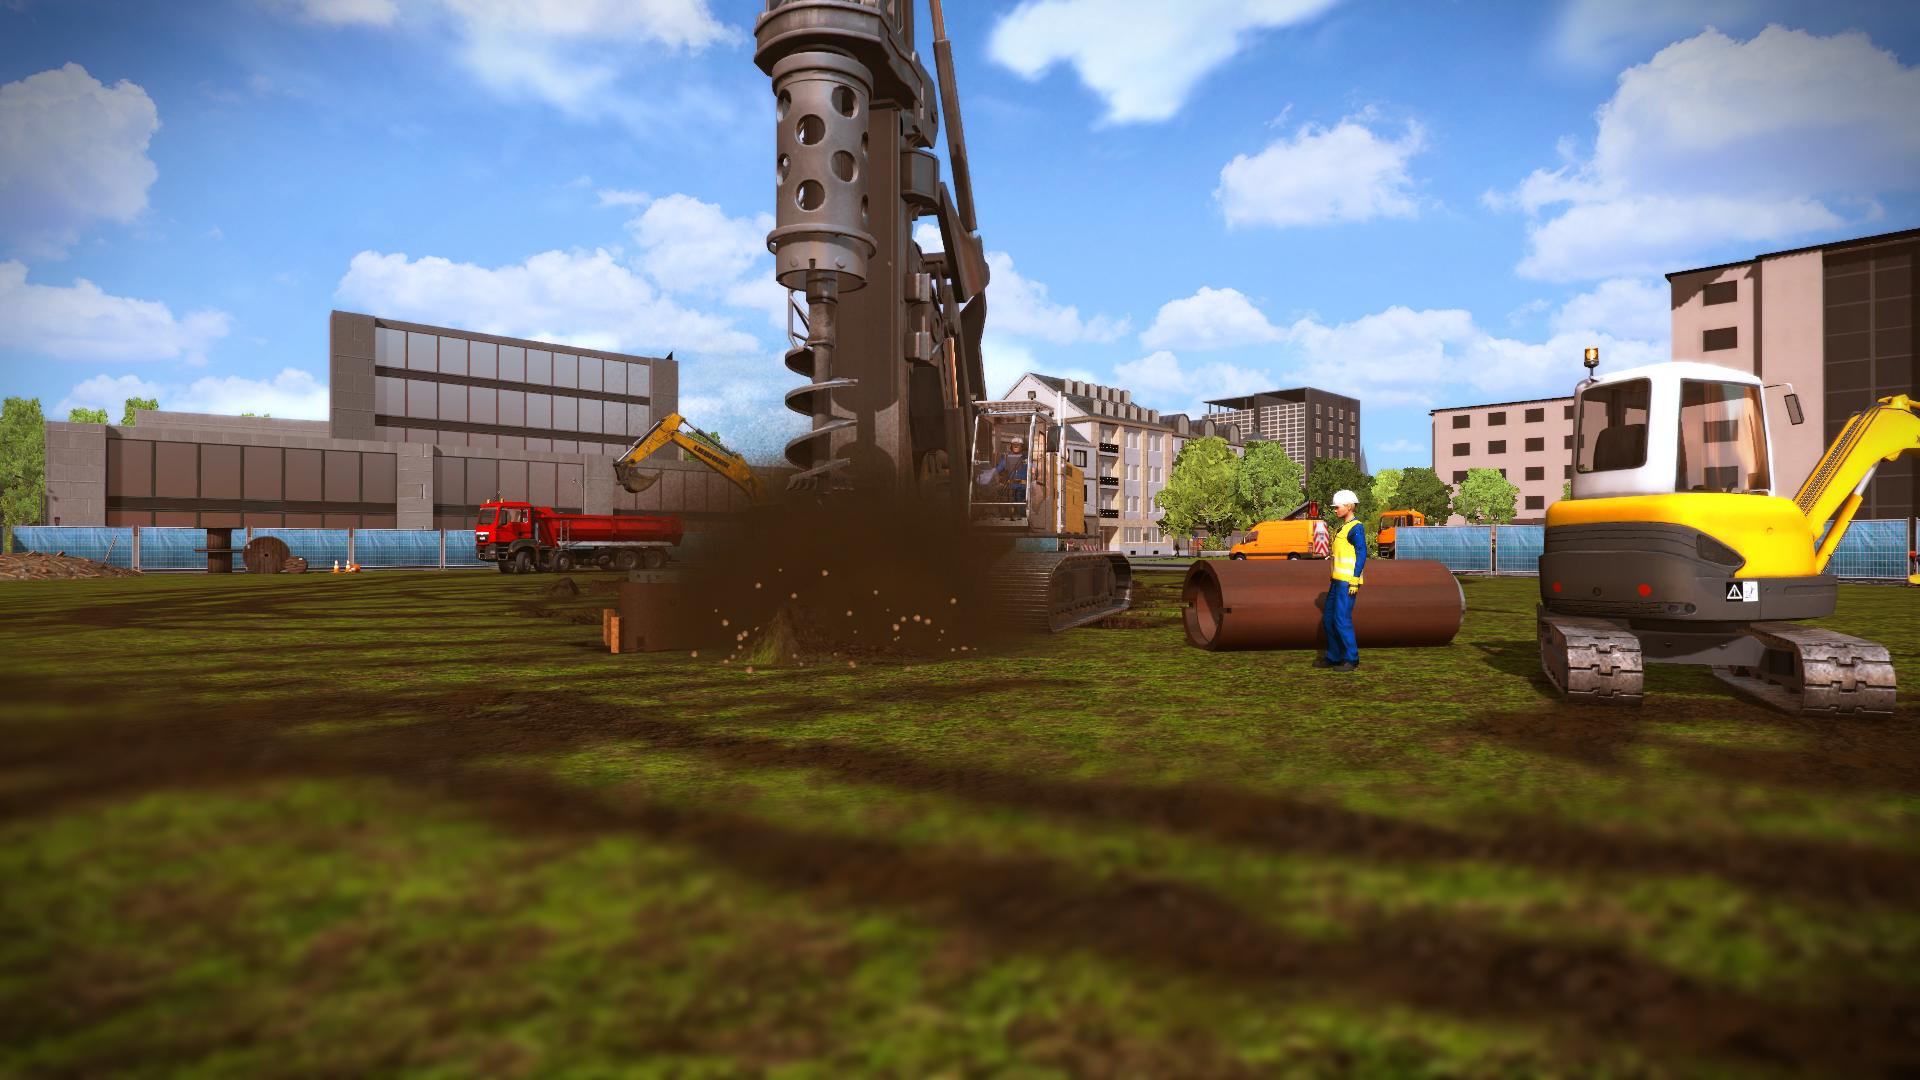 Screenshot №12 from game Construction Simulator 2015